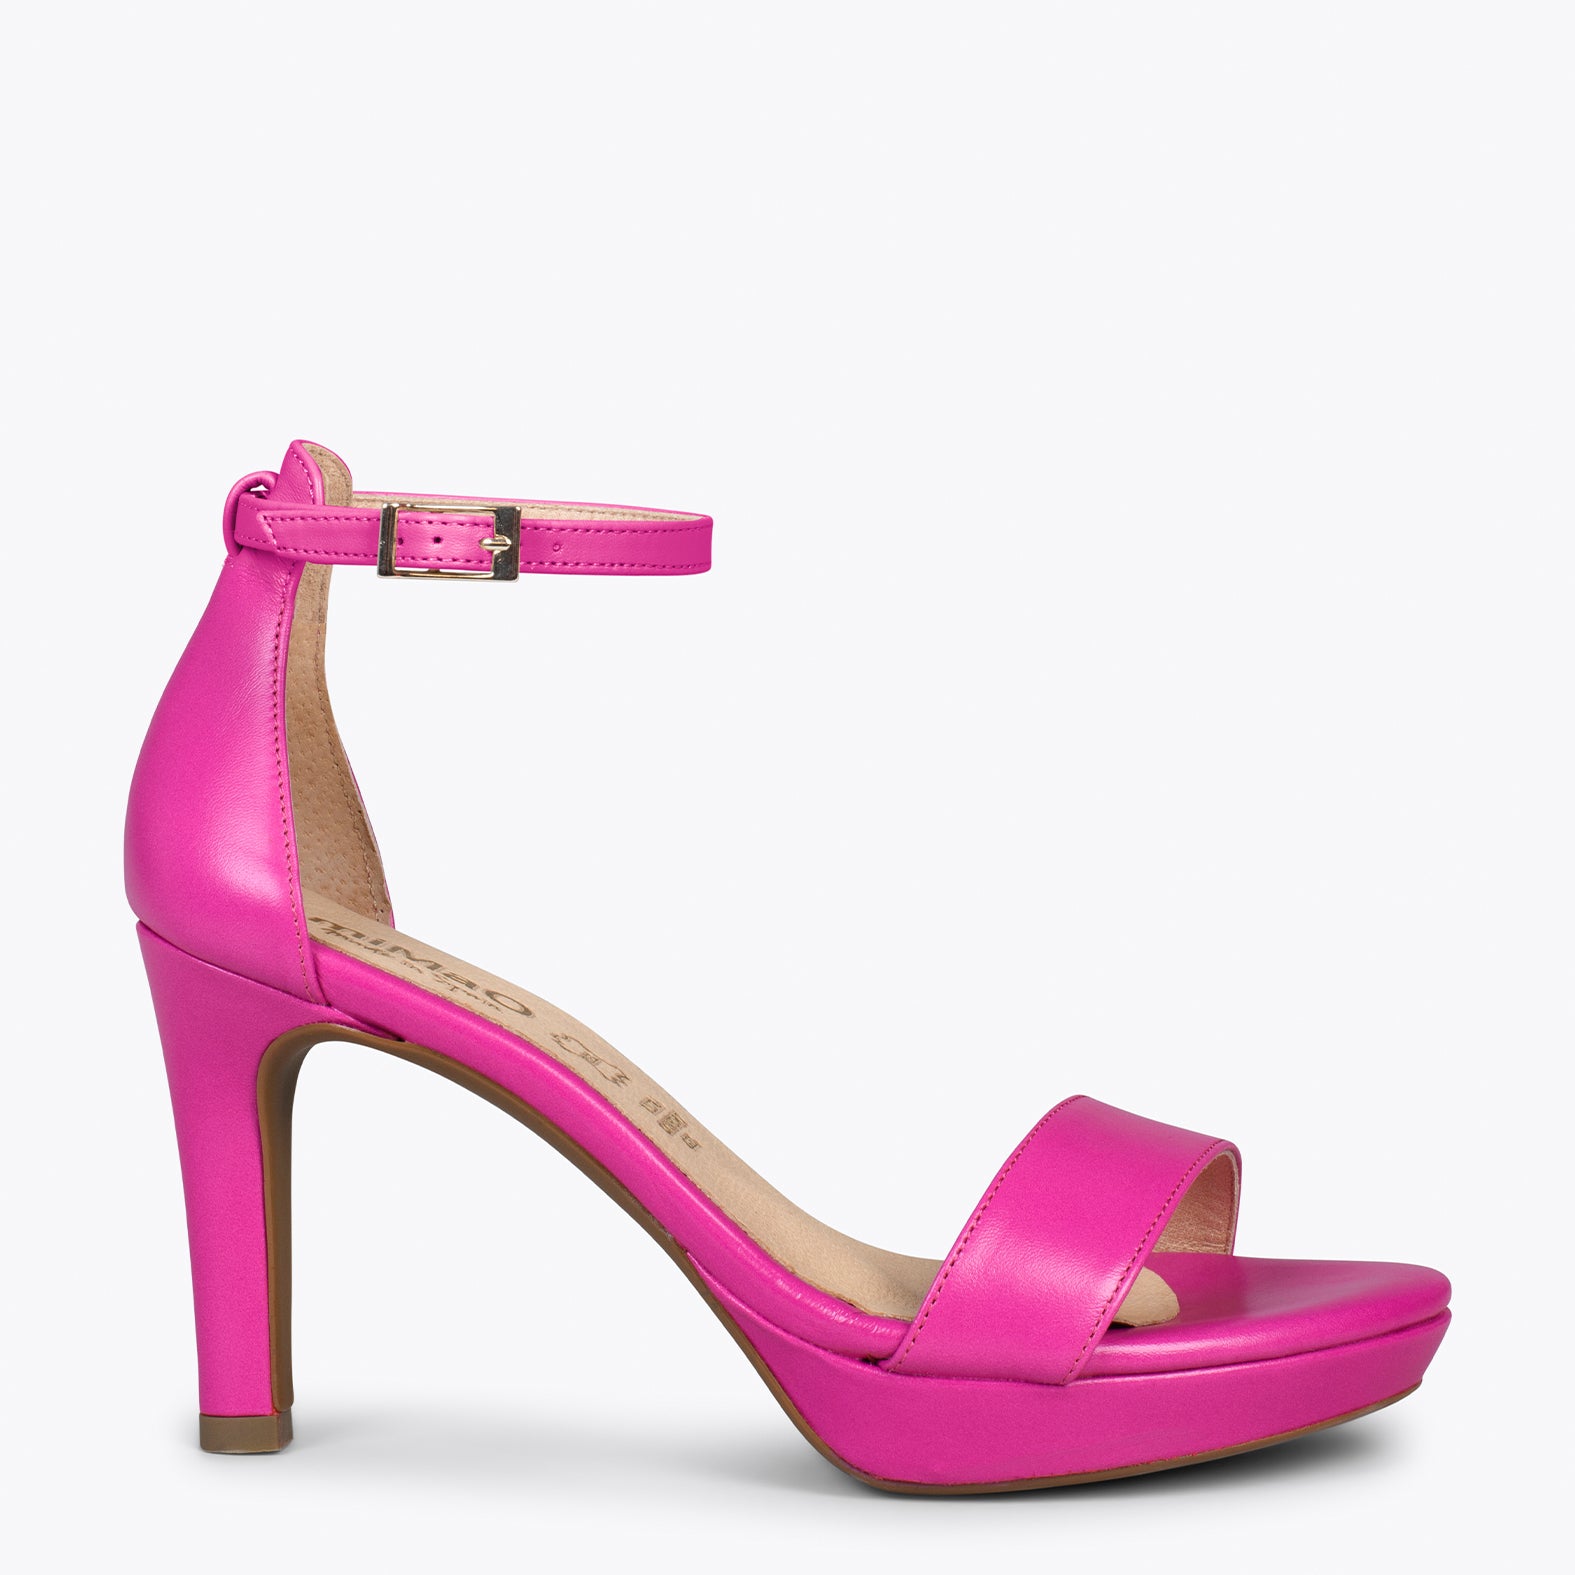 PARTY – HOT PINK high heel sandals with platform